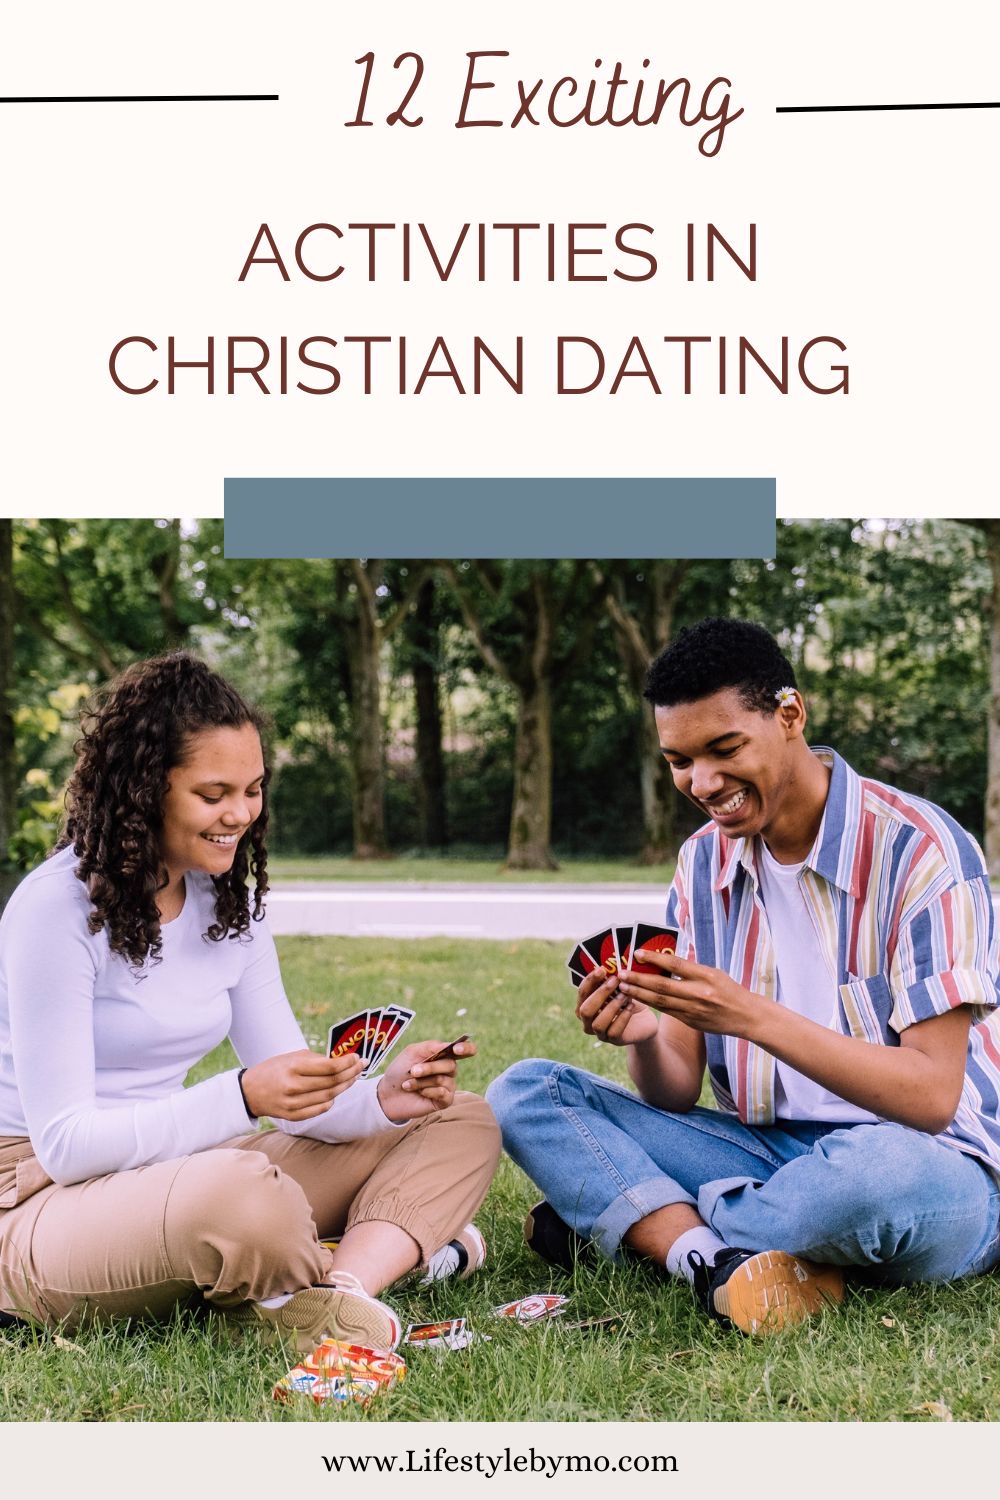 Christian couples